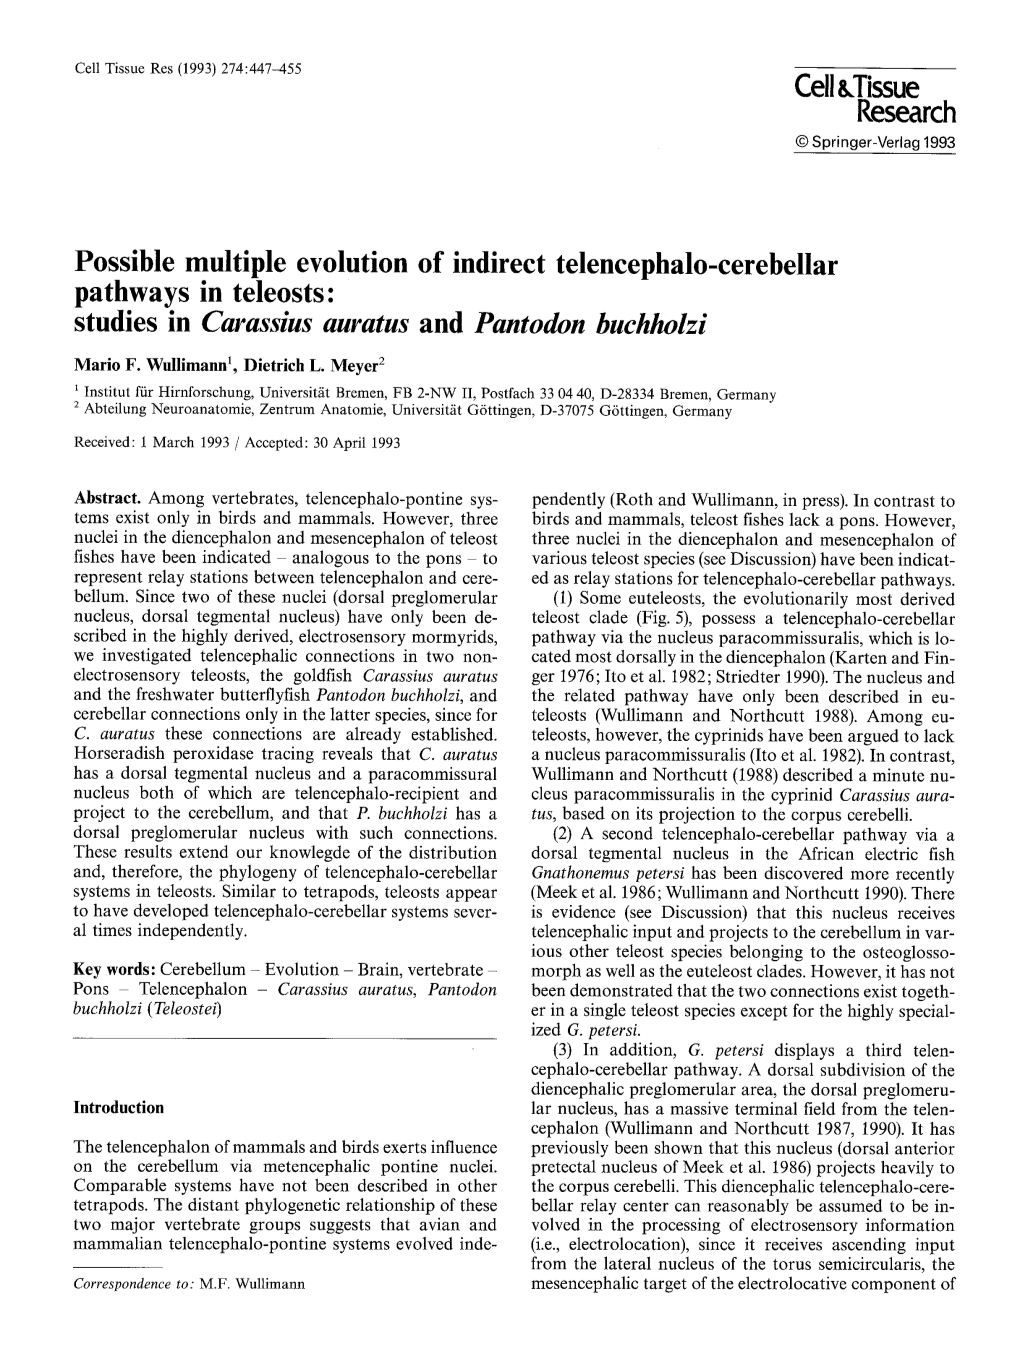 Possible Multiple Evolution of Indirect Telencephalo-Cerebellar Pathways in Teleosts: Studies in Carassius Auratus and Pantodon Buchholzi